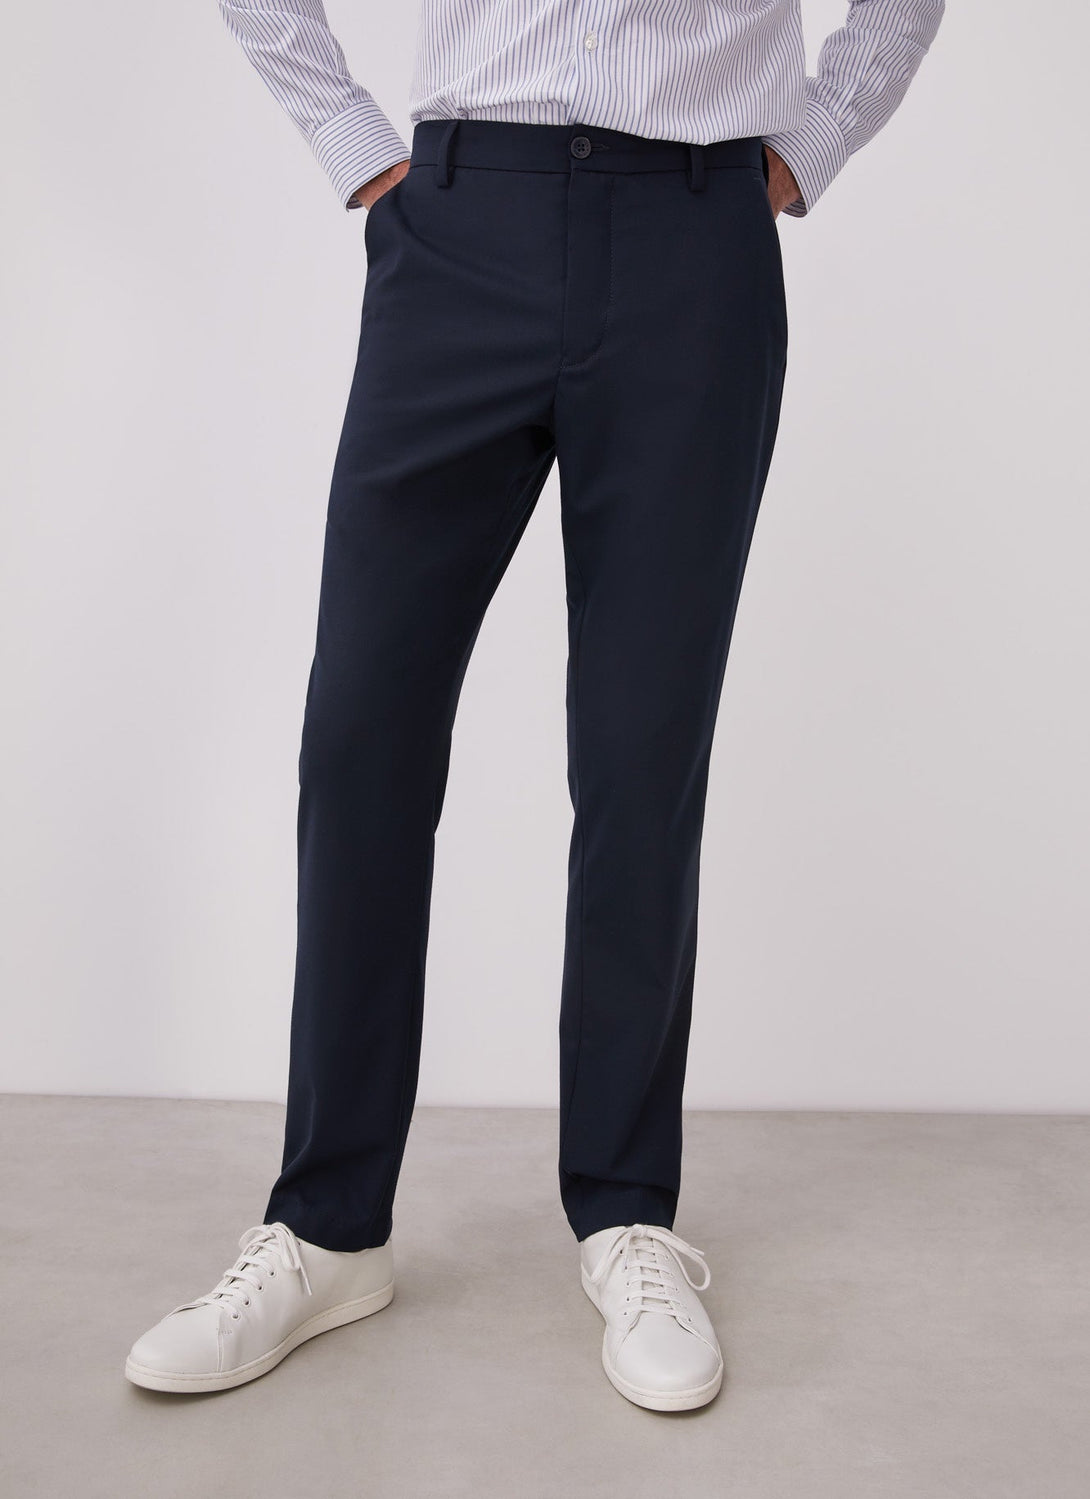 Men Trousers | Navy Blue Elastic Slim Fit Trousers by Spanish designer Adolfo Dominguez